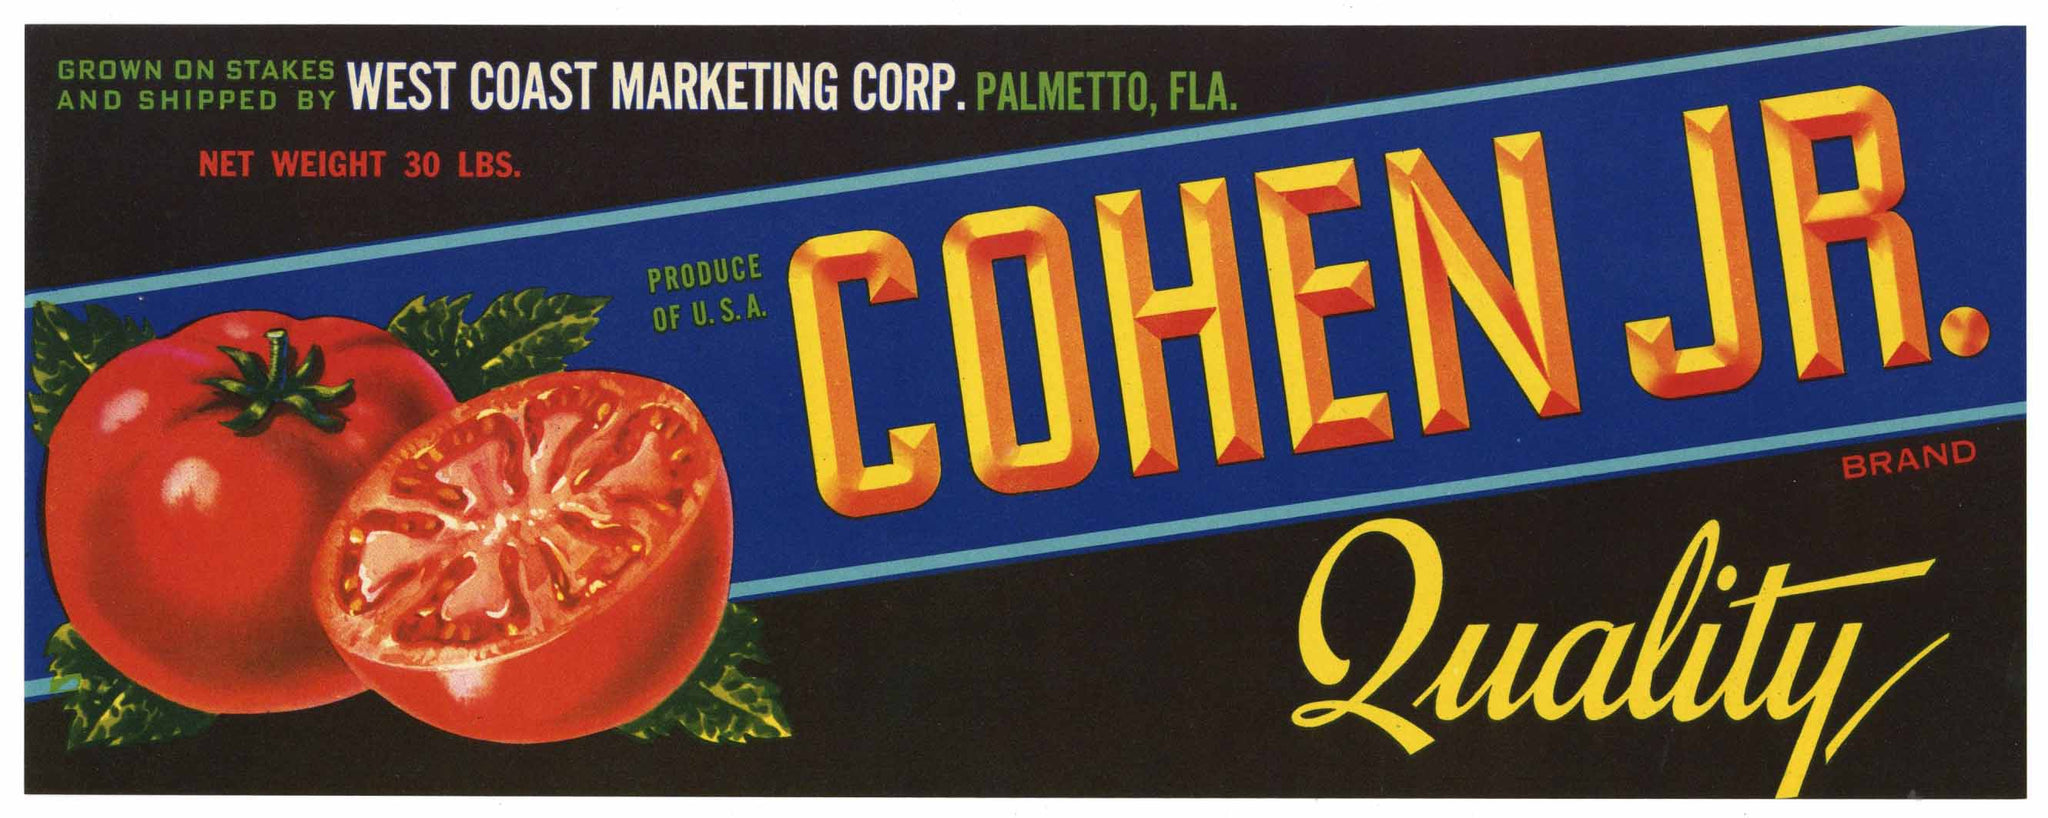 Cohen Jr. Brand Vintage Palmetto Florida Produce Crate Label, Tomato